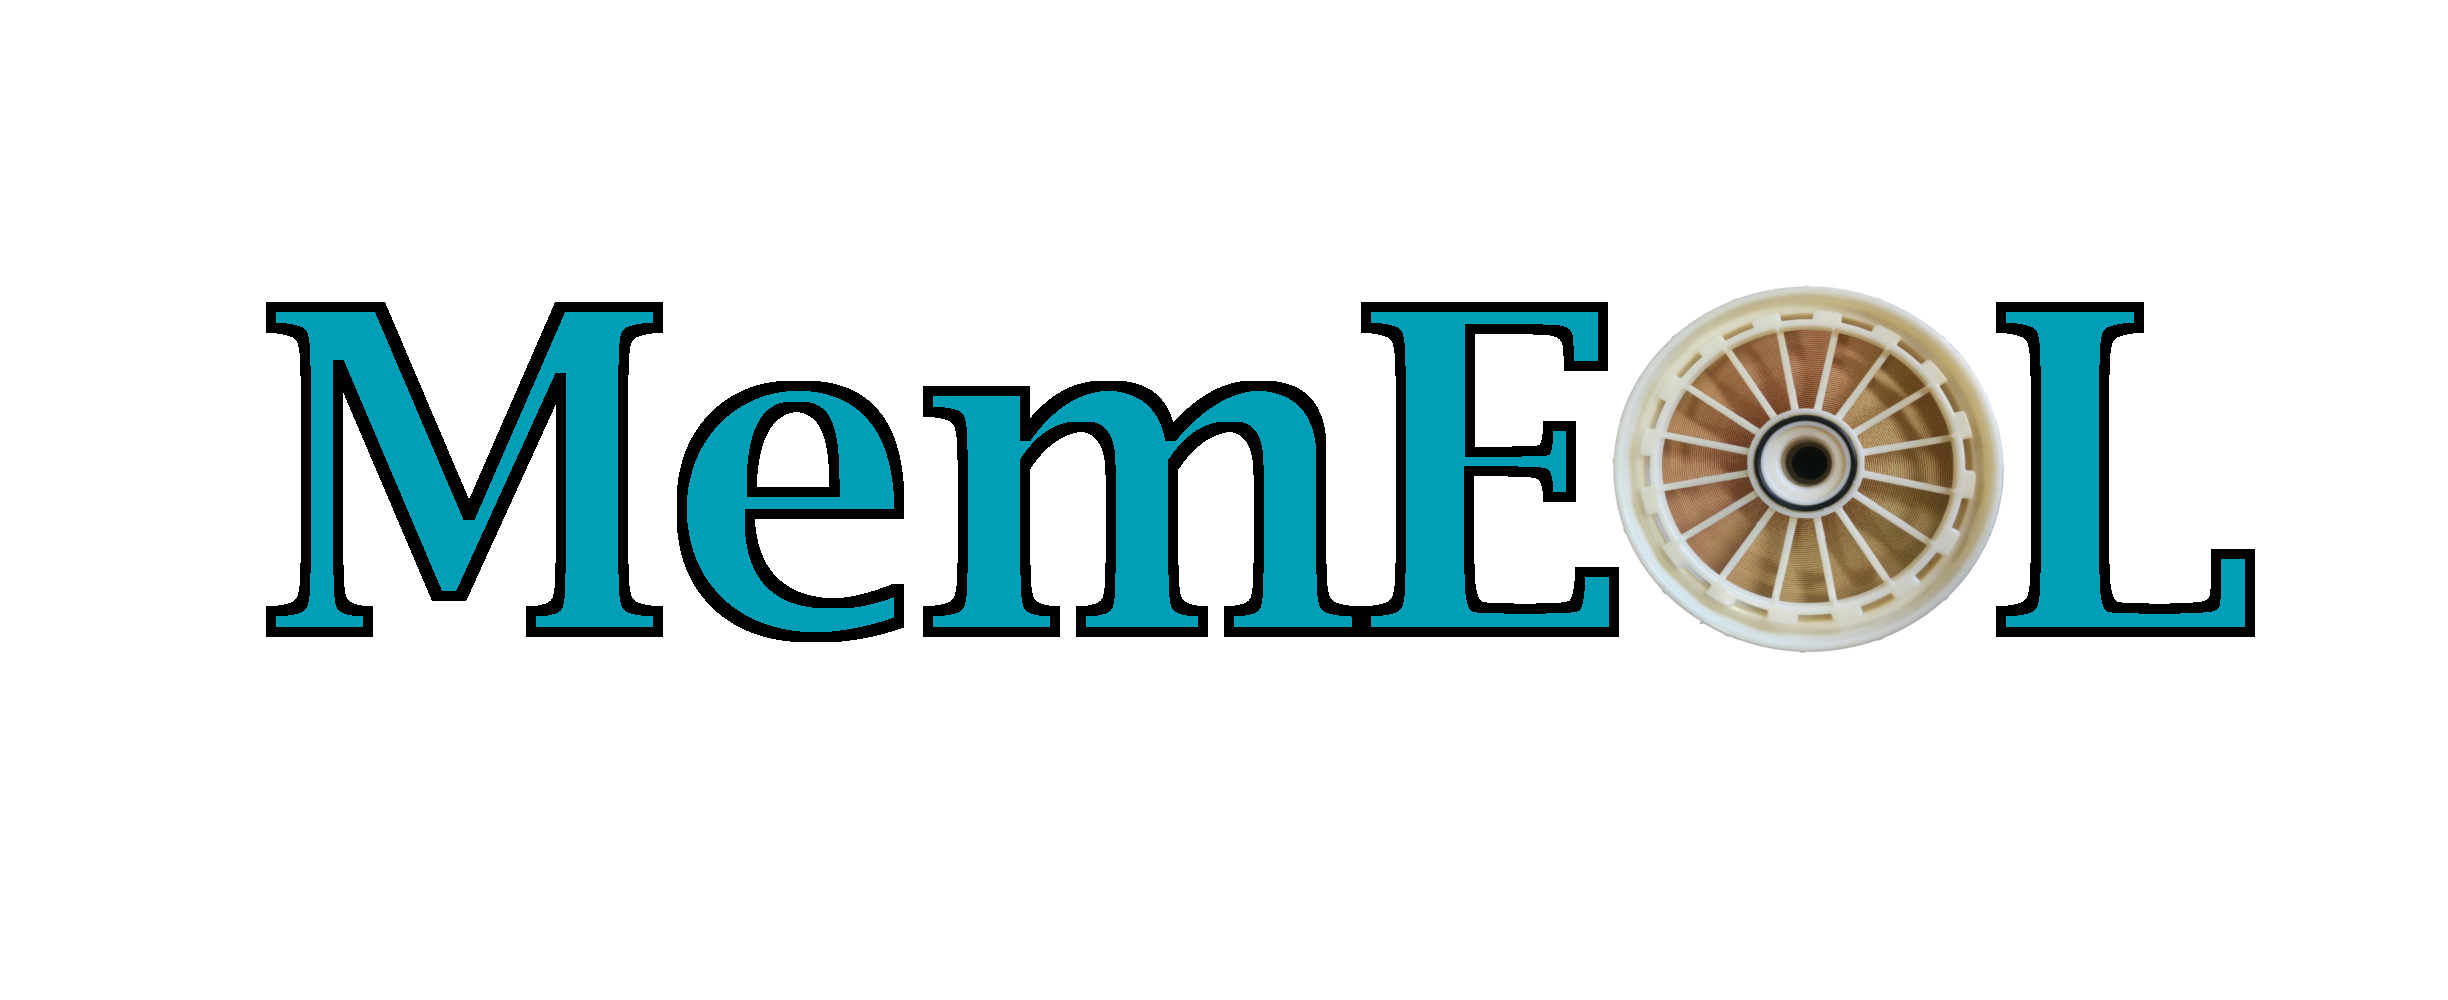 MemEOL linkedin logo.png